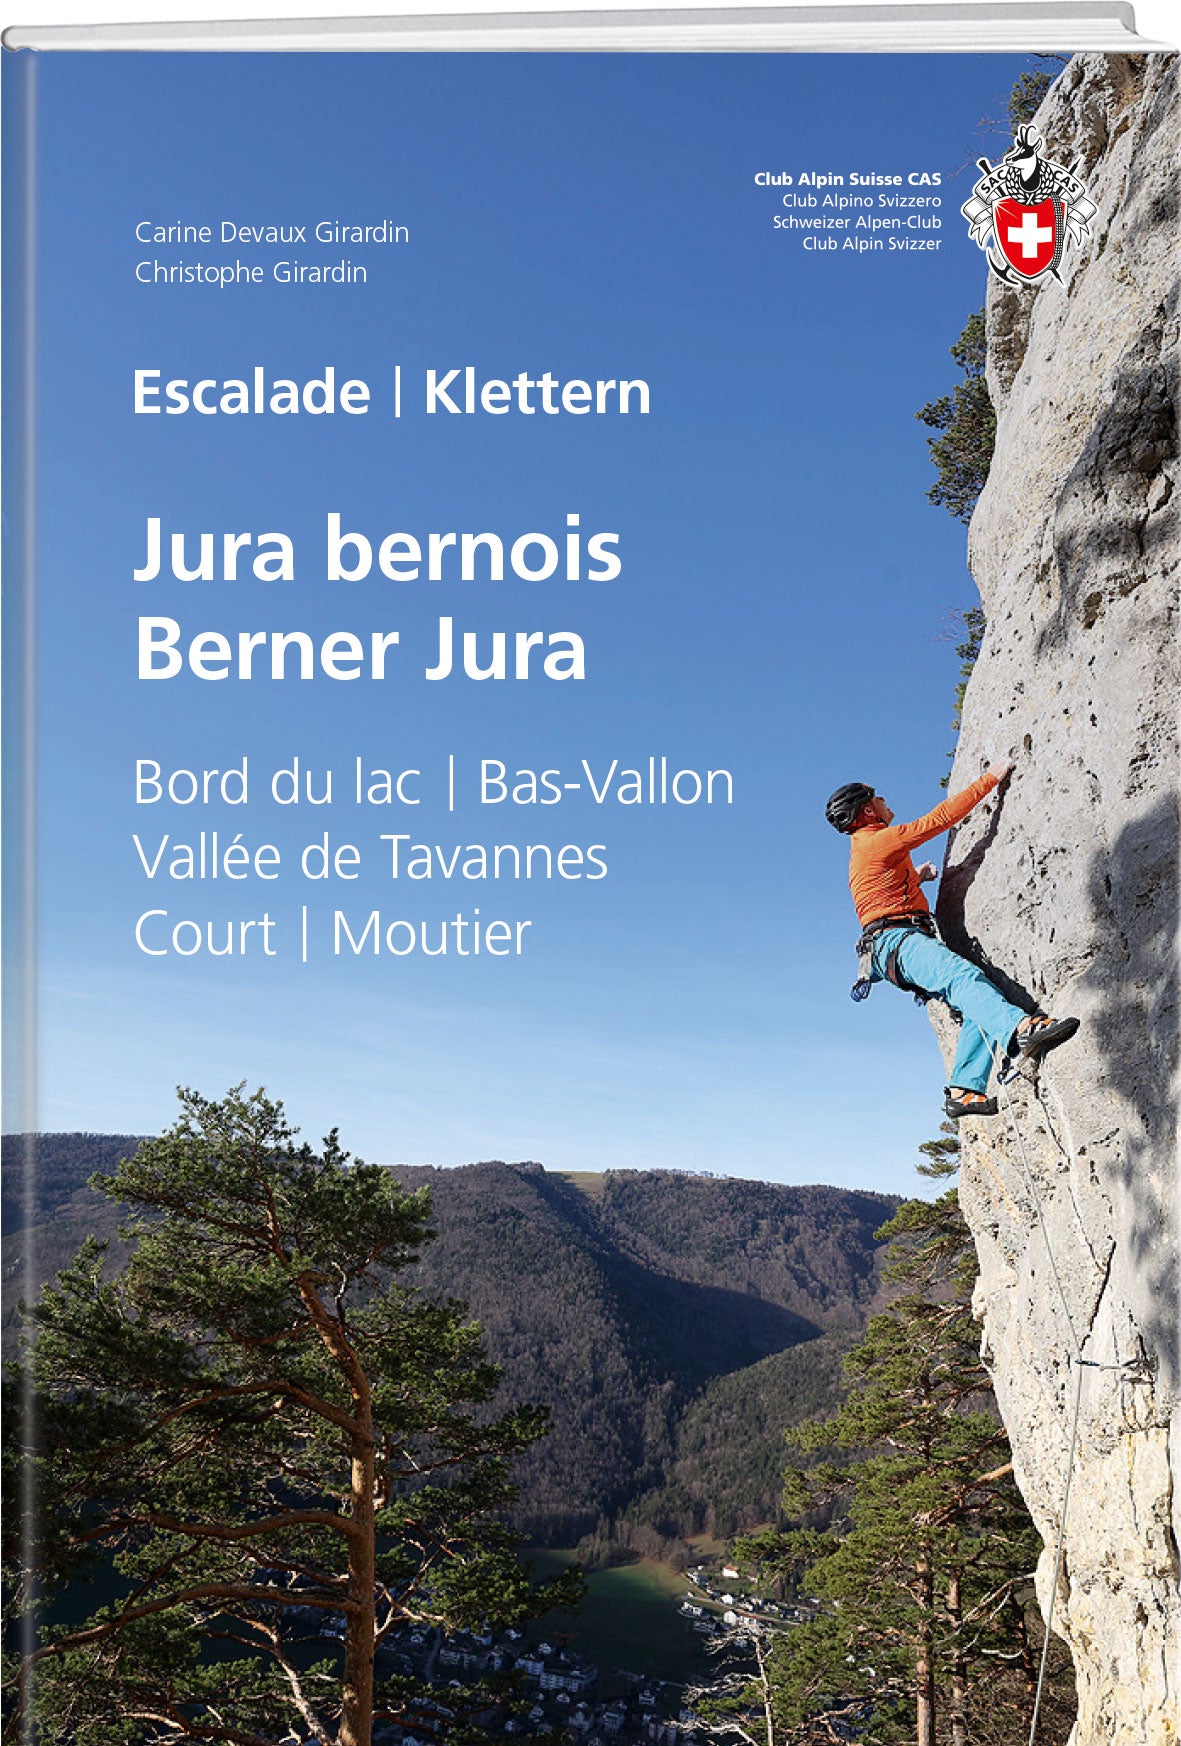 Carine und Christophe Girardin: Klettern Berner Jura / Escalade Jura bernois - A WEBER VERLAG